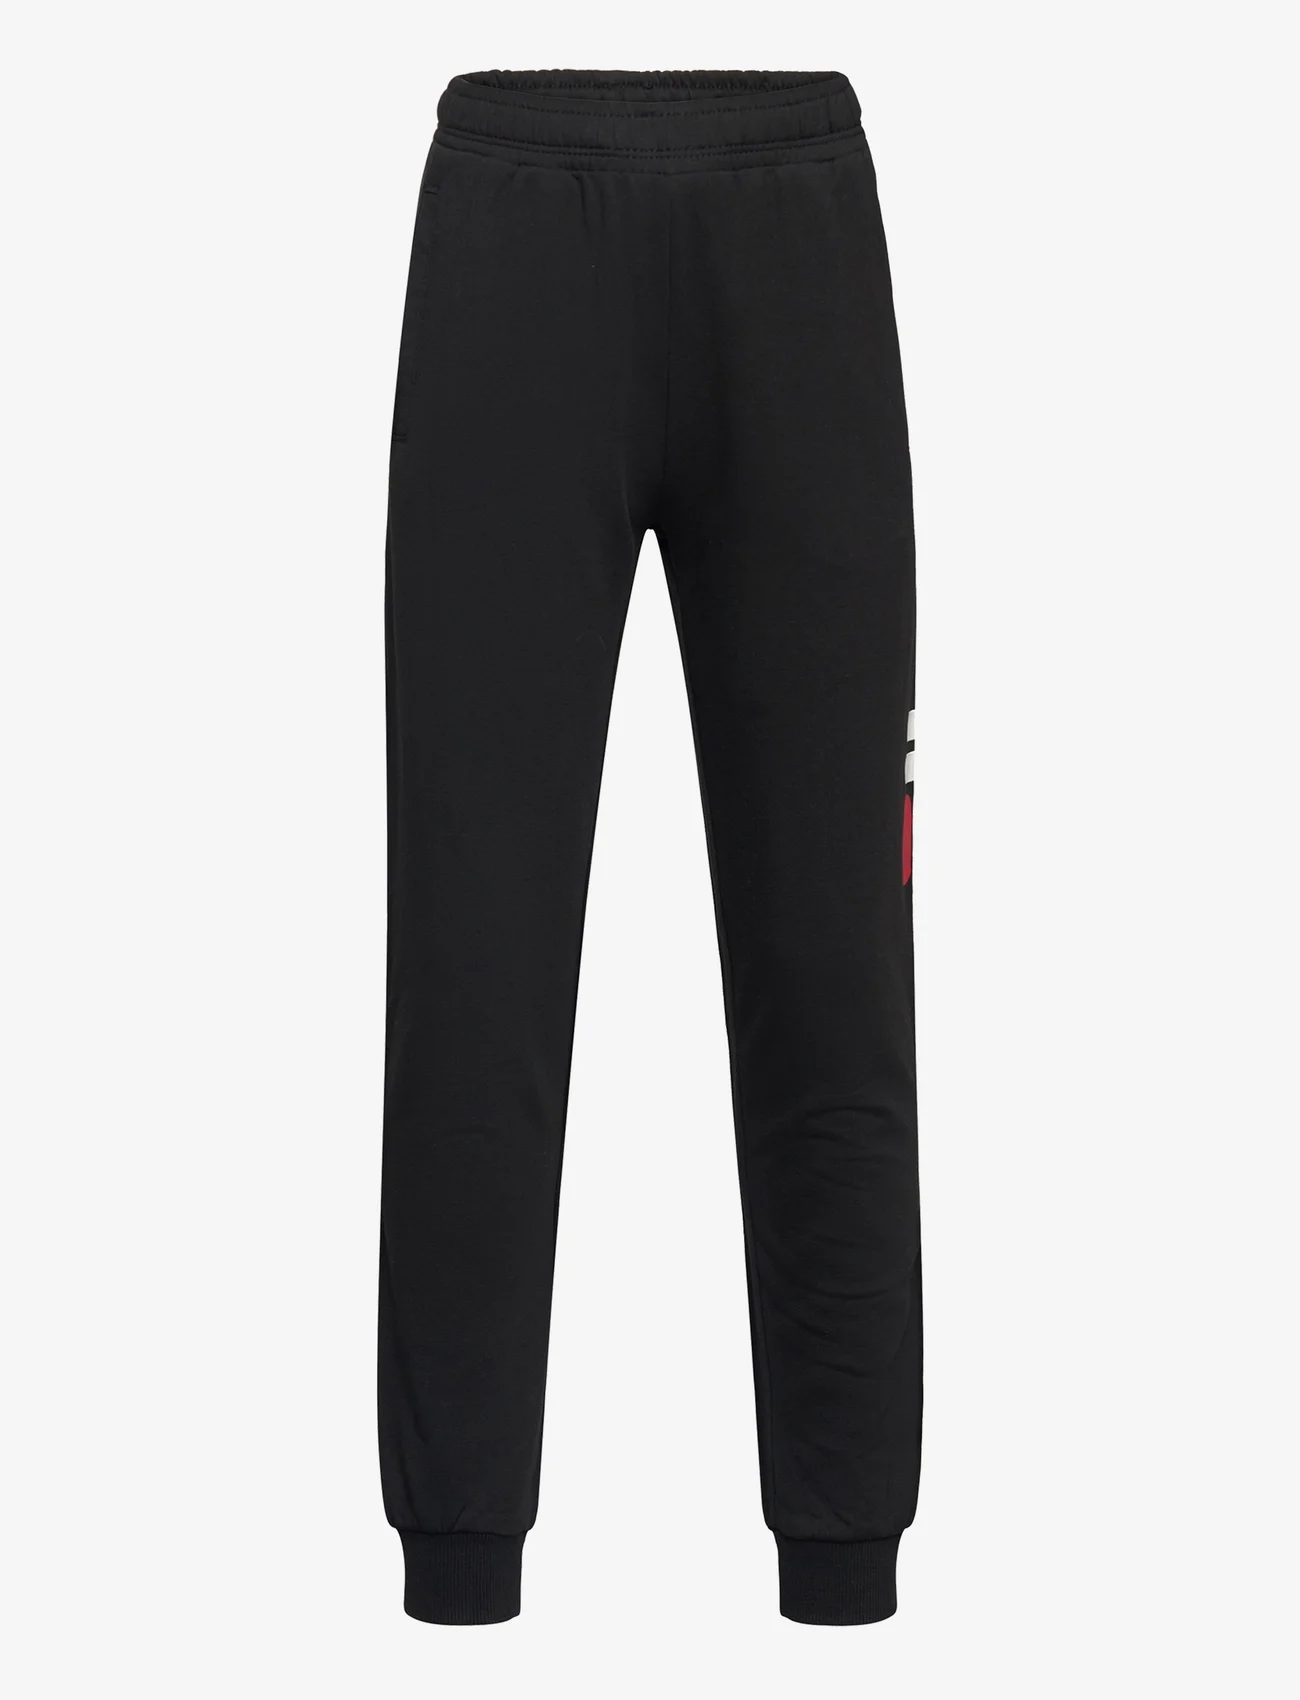 FILA - BALBOA classic logo sweat pants - sports bottoms - black - 0